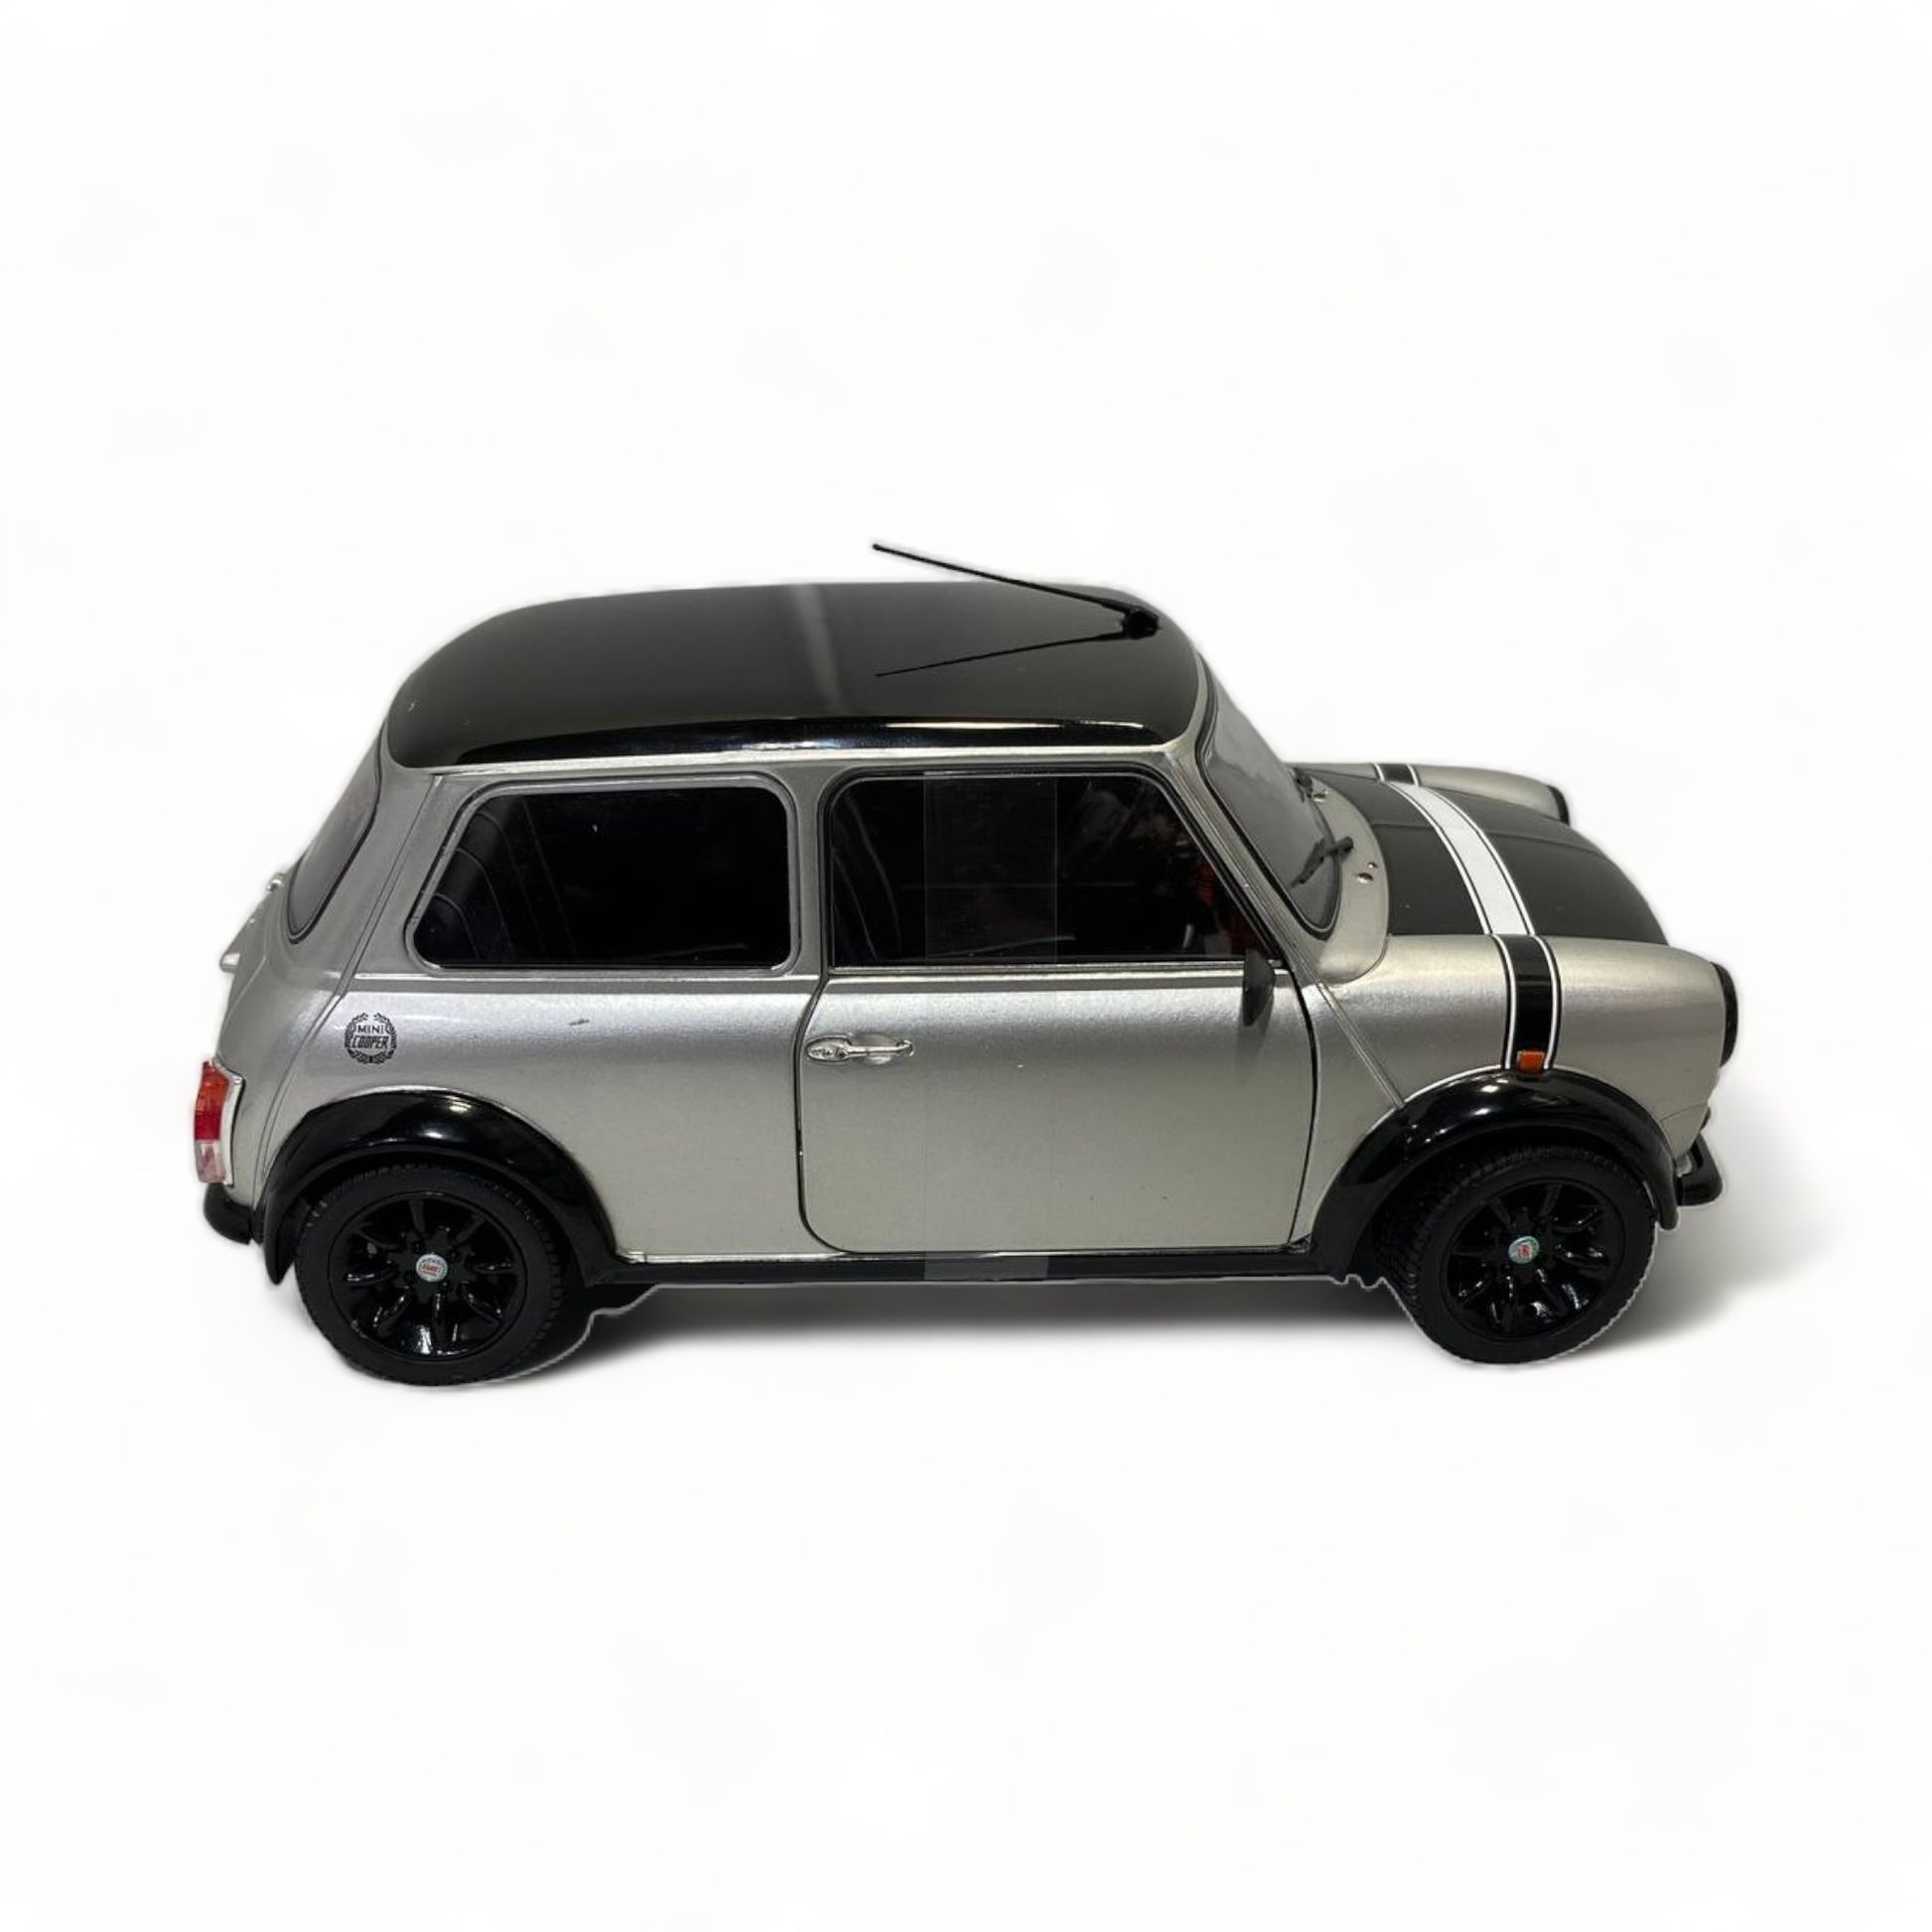 1/18 Solido Diecast - Mini Cooper Sport (1998) in Silver|Sold in Dturman.com Dubai UAE.